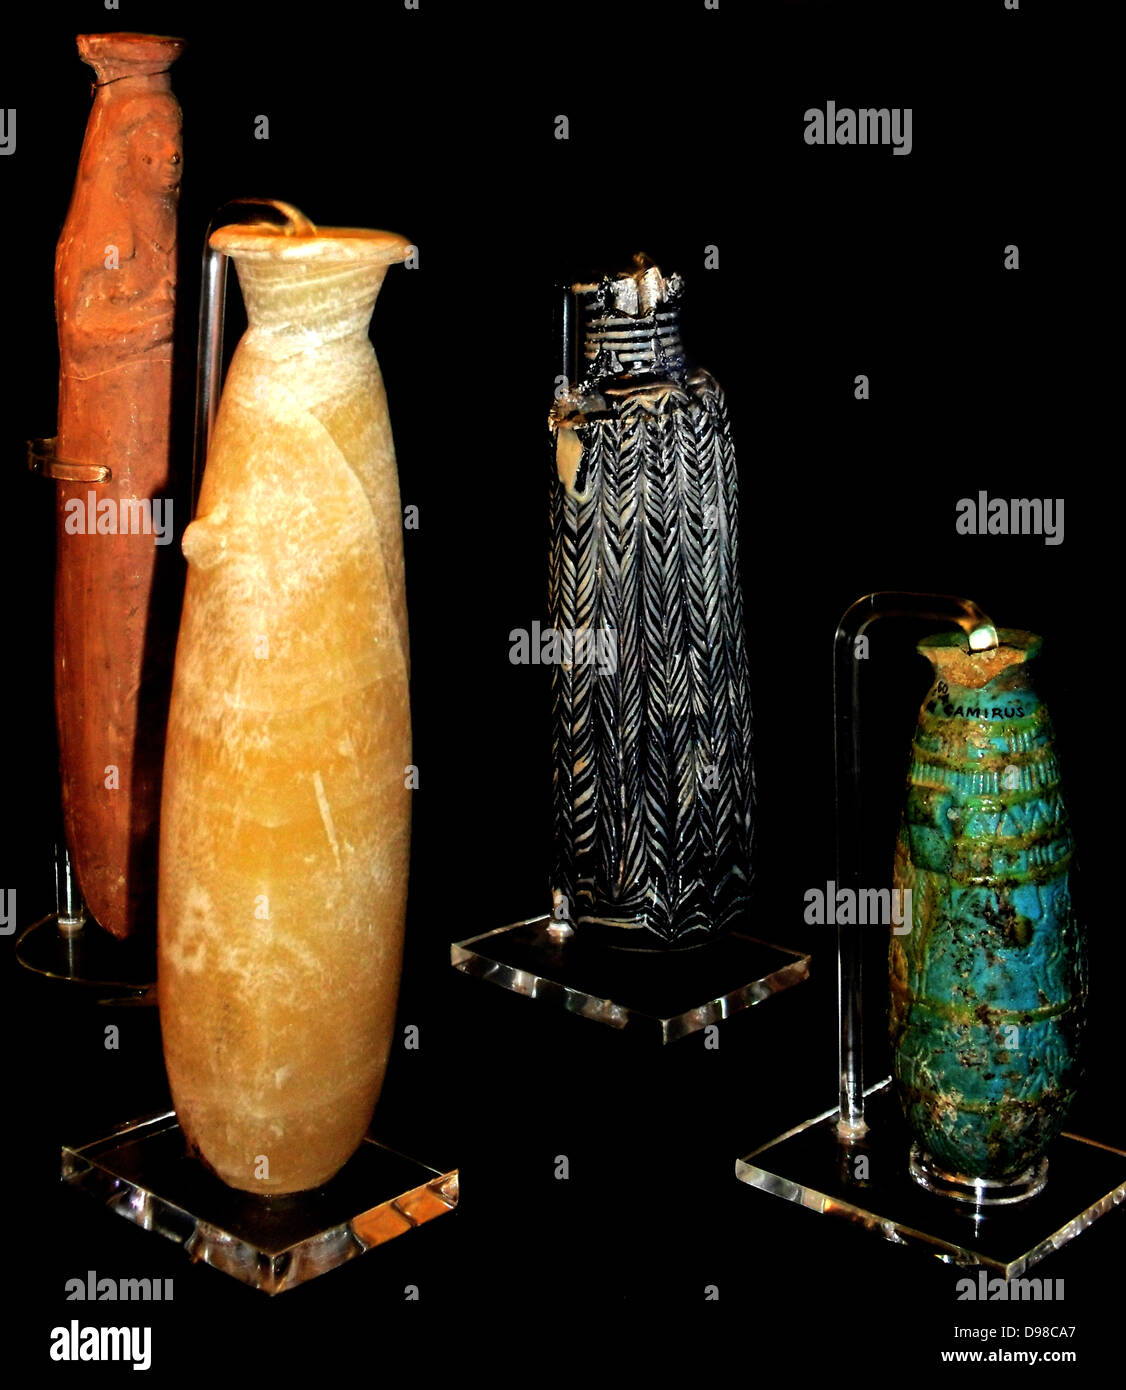 Grupo de alabastro (frascos de perfume) de Kamiros, 7ª-6ª siglo A.C. 1. Alabastro alabastron (frasco de perfume), 2. Alabastron terracota, hecha en  Jonia, 3. Núcleo de vidrio formada alabastron, hecha en Rodas o